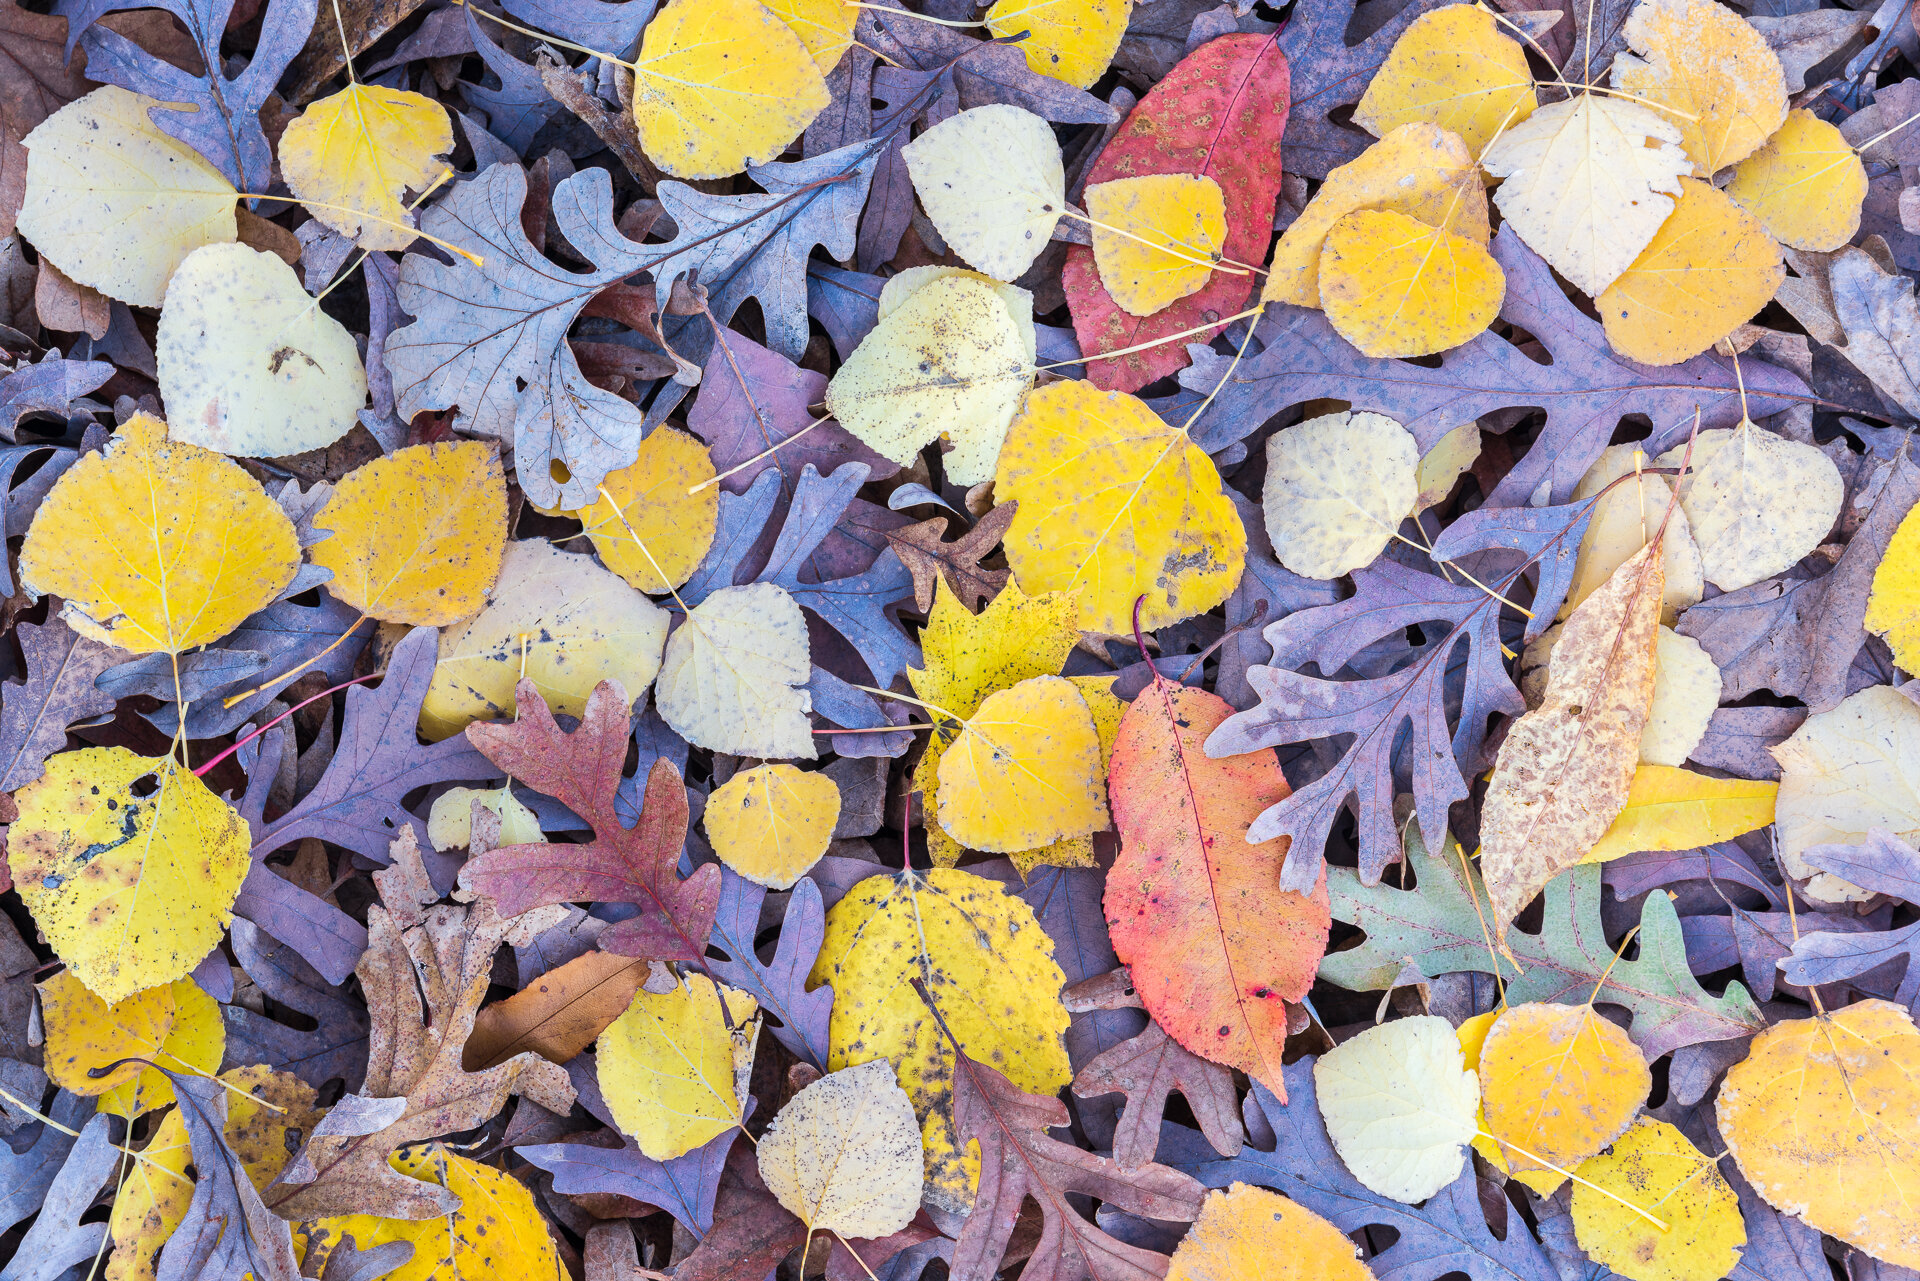 White oak and aspen leaves: Afton SP